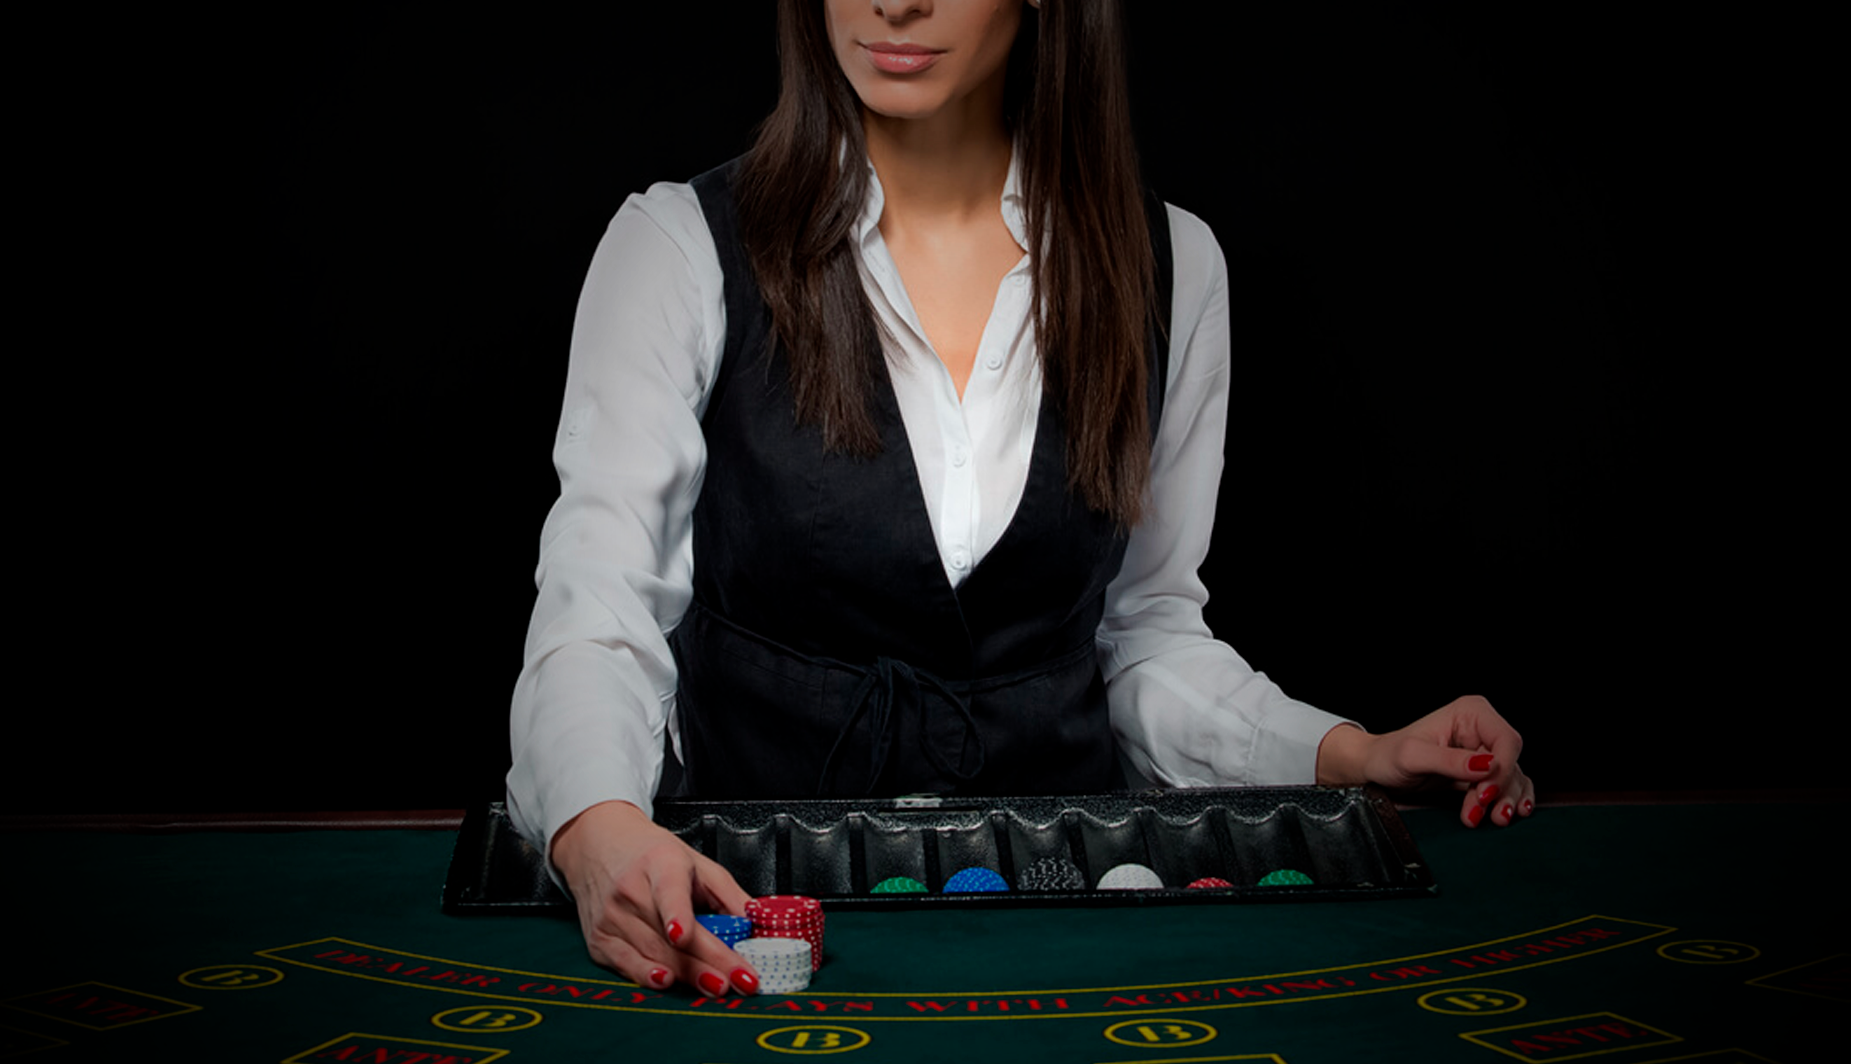 Вакансии оператор онлайн казино секс казино